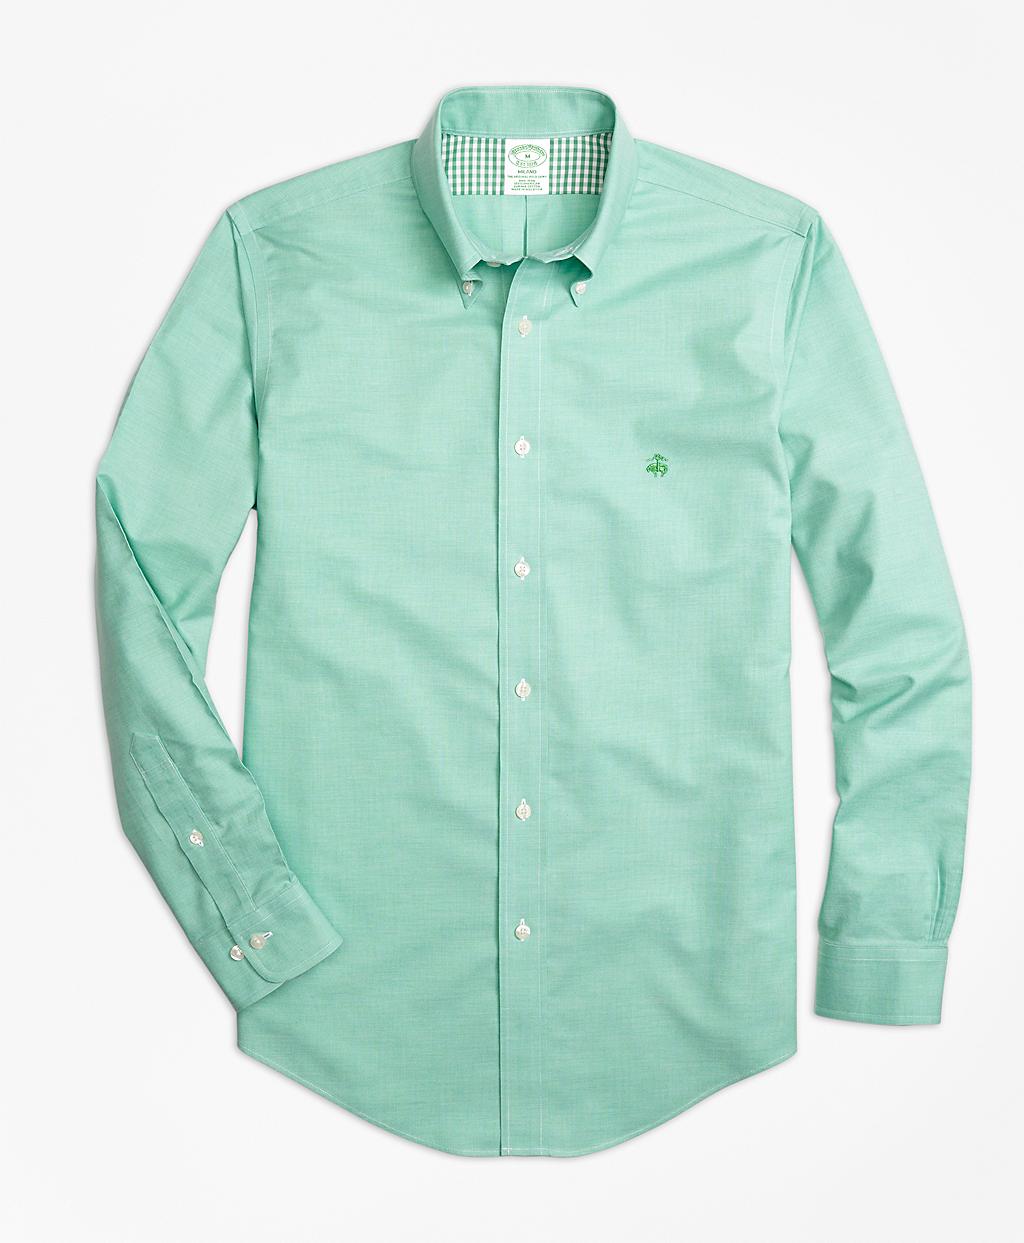 Купить рубашку кнопки. Button down рубашки. Brooks brothers рубашка зеленая. Button down рубашки мужские. Рубашка мужская зеленая Oxford.